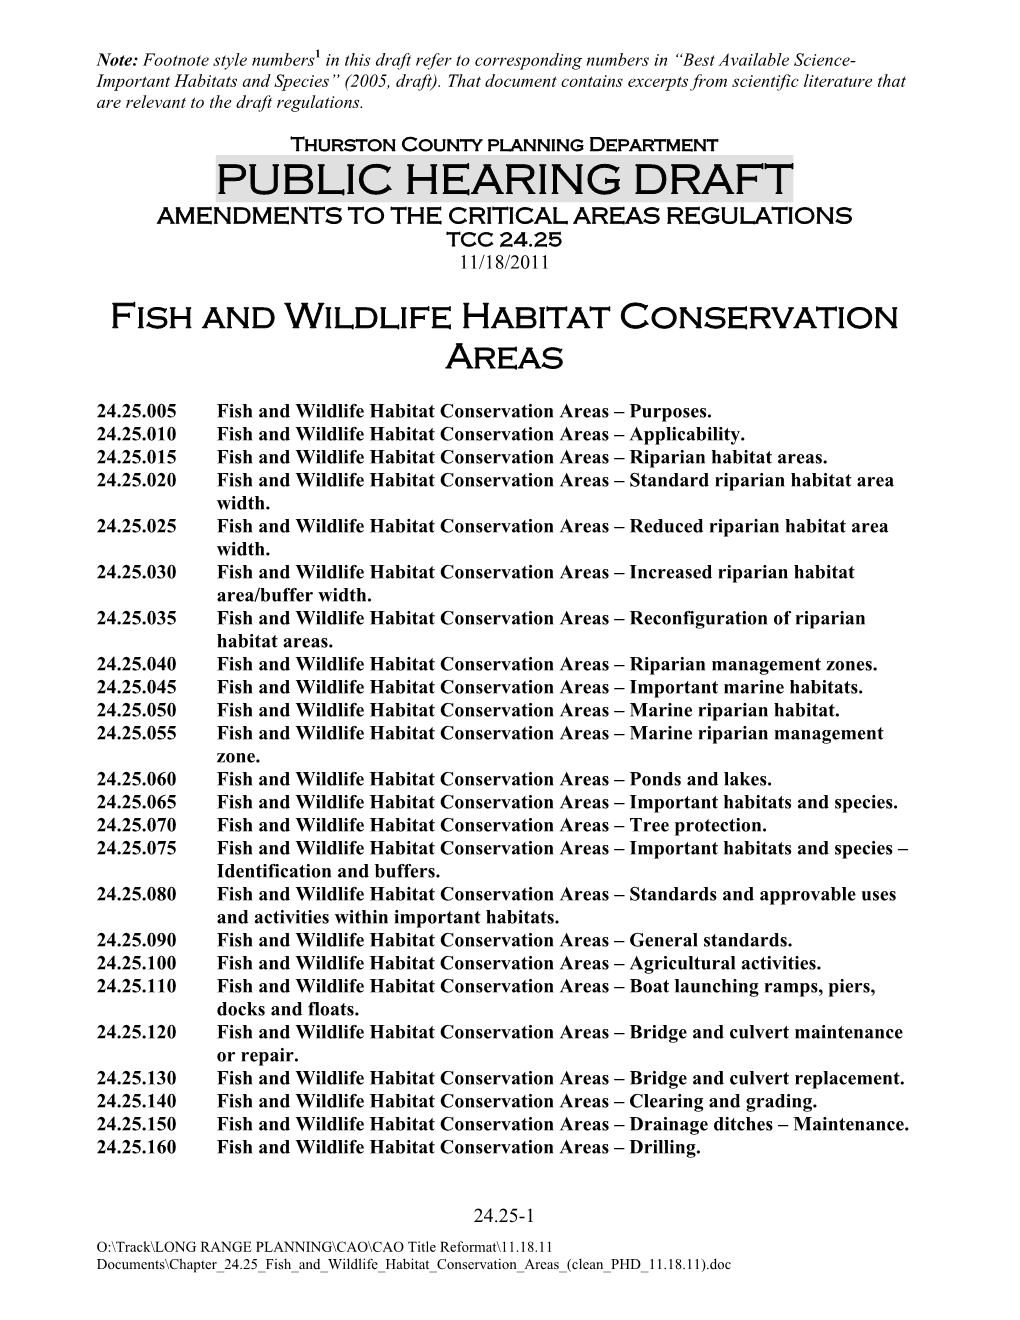 Public Hearing Draft Amendments to the Critical Areas Regulations Tcc 24.25 11/18/2011